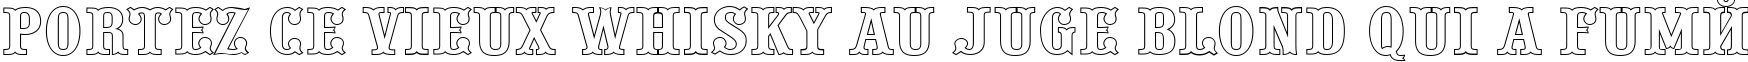 Пример написания шрифтом a_PresentumOtl текста на французском